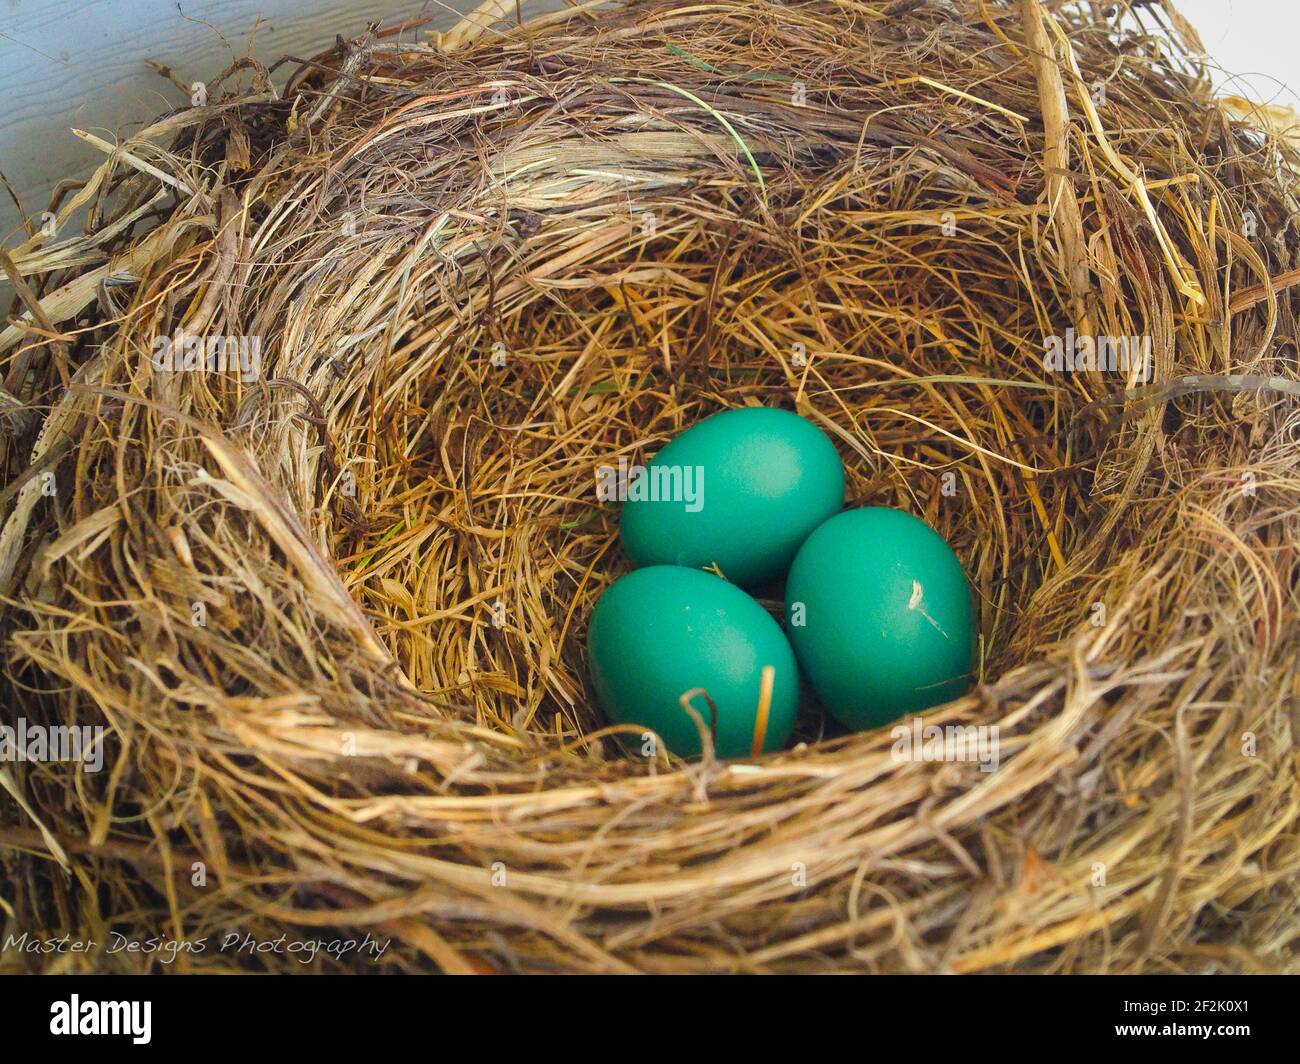 3 Three Robin Eggs In A Woven Nest Stock Photo